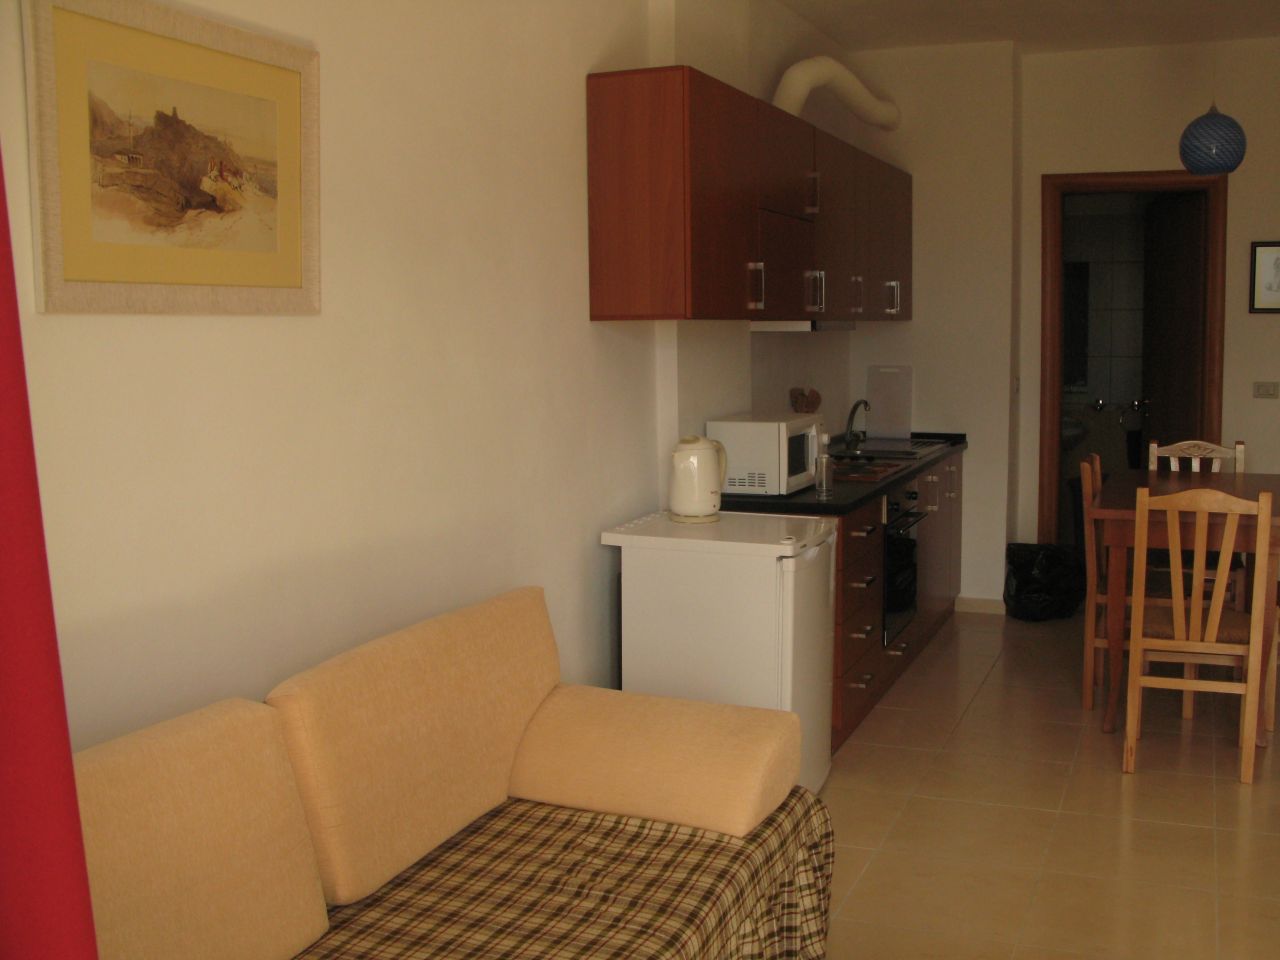 Apartment for Sale in Orikum, coastal village near the city of Vlora, in Albania. 